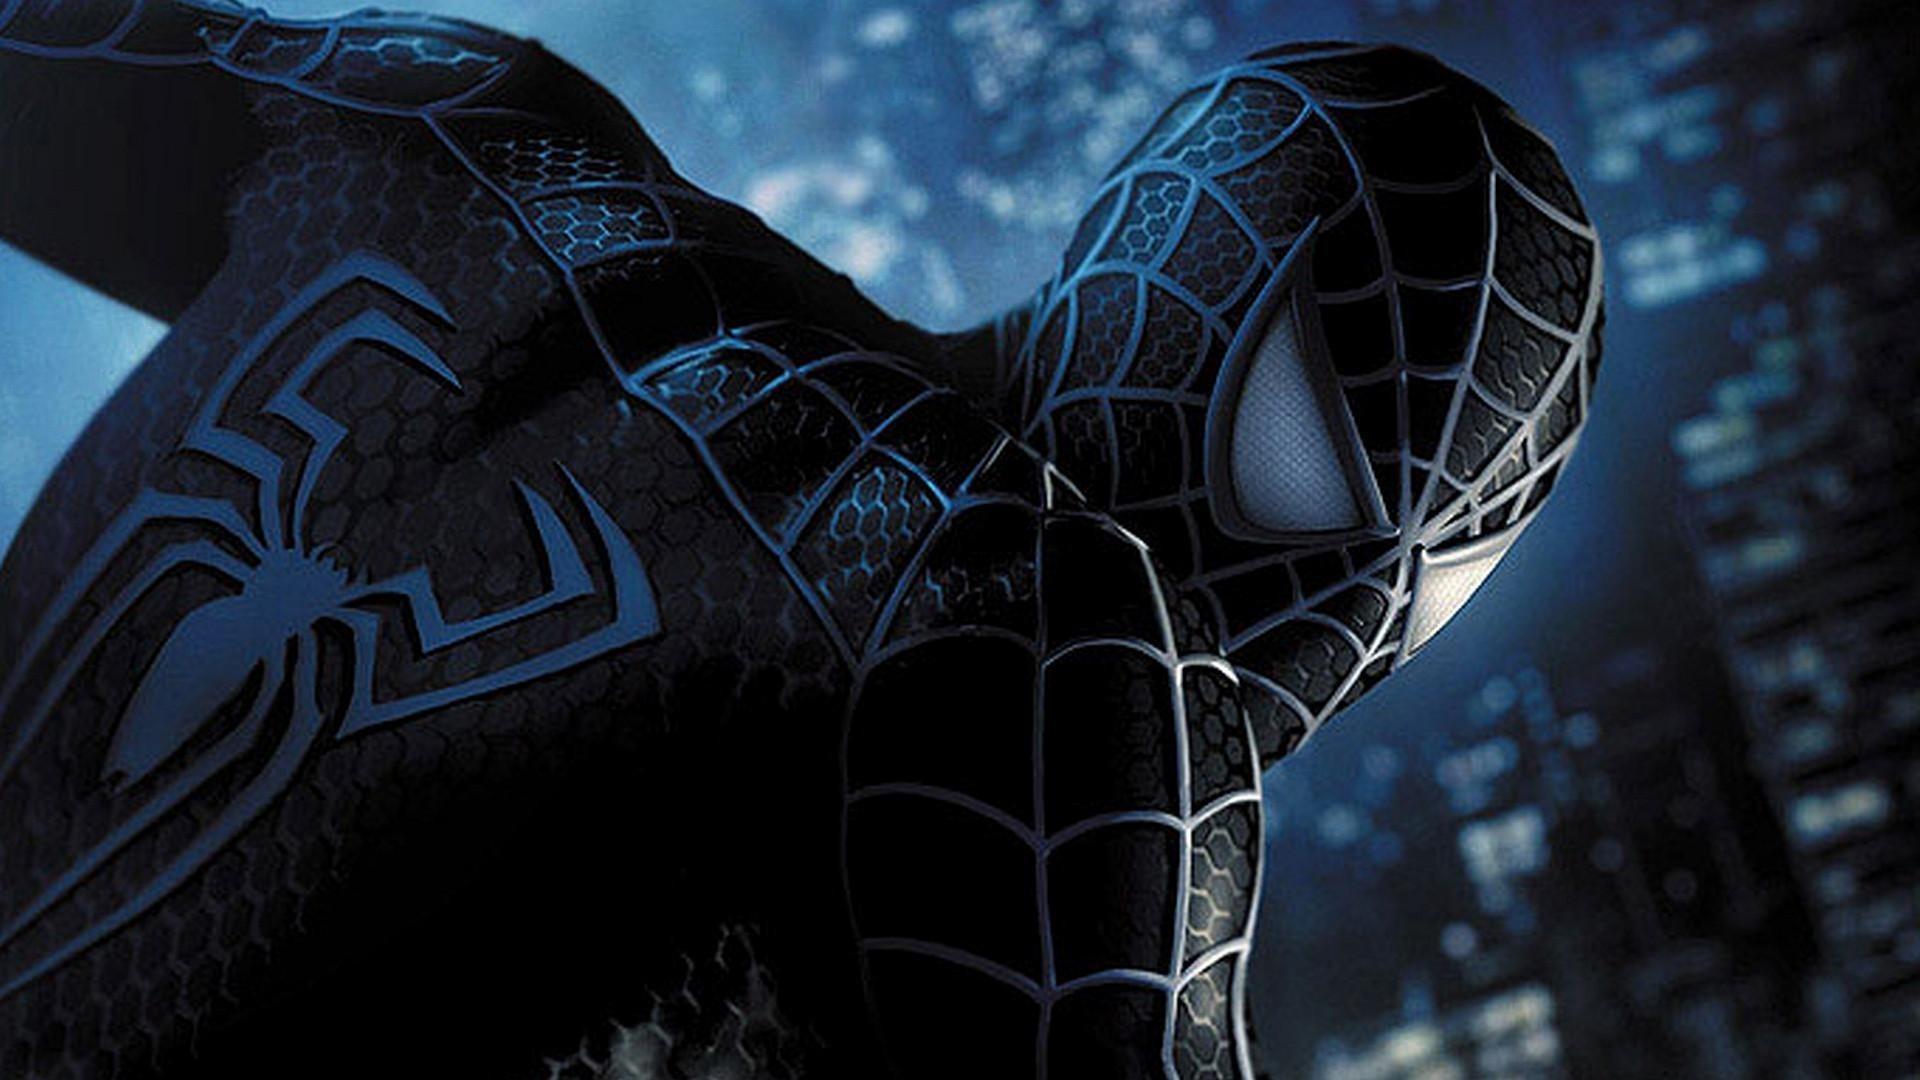 Black Suit Spider Man 3 Spider Man Superhero Movies Marvel Comics 1920x1080